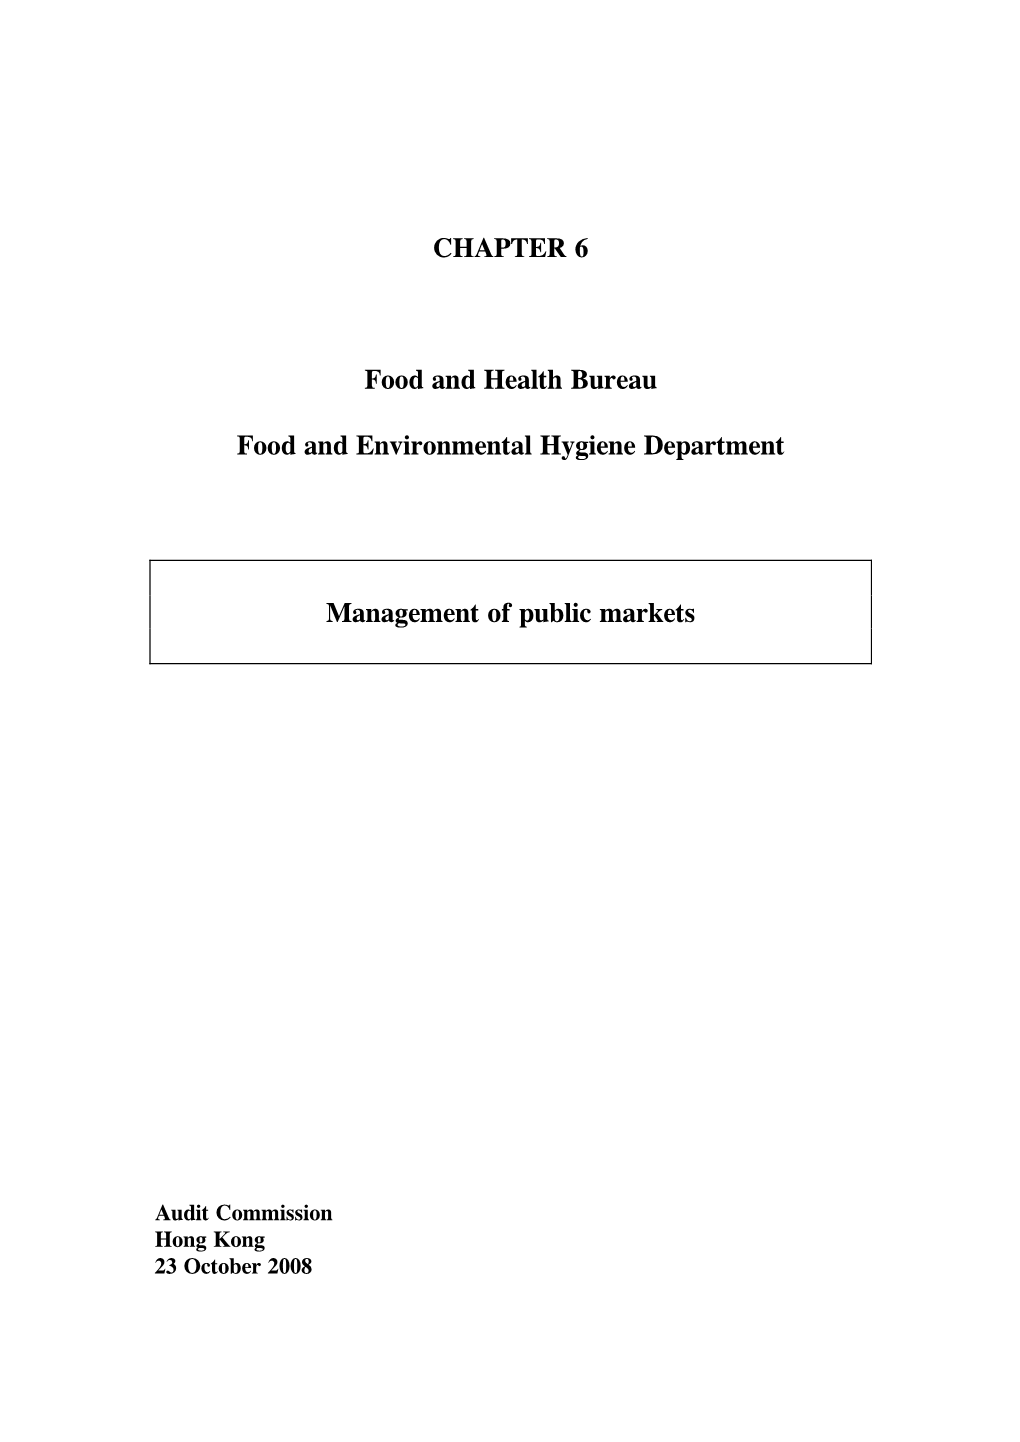 CHAPTER 6 Food and Health Bureau Food and Environmental Hygiene